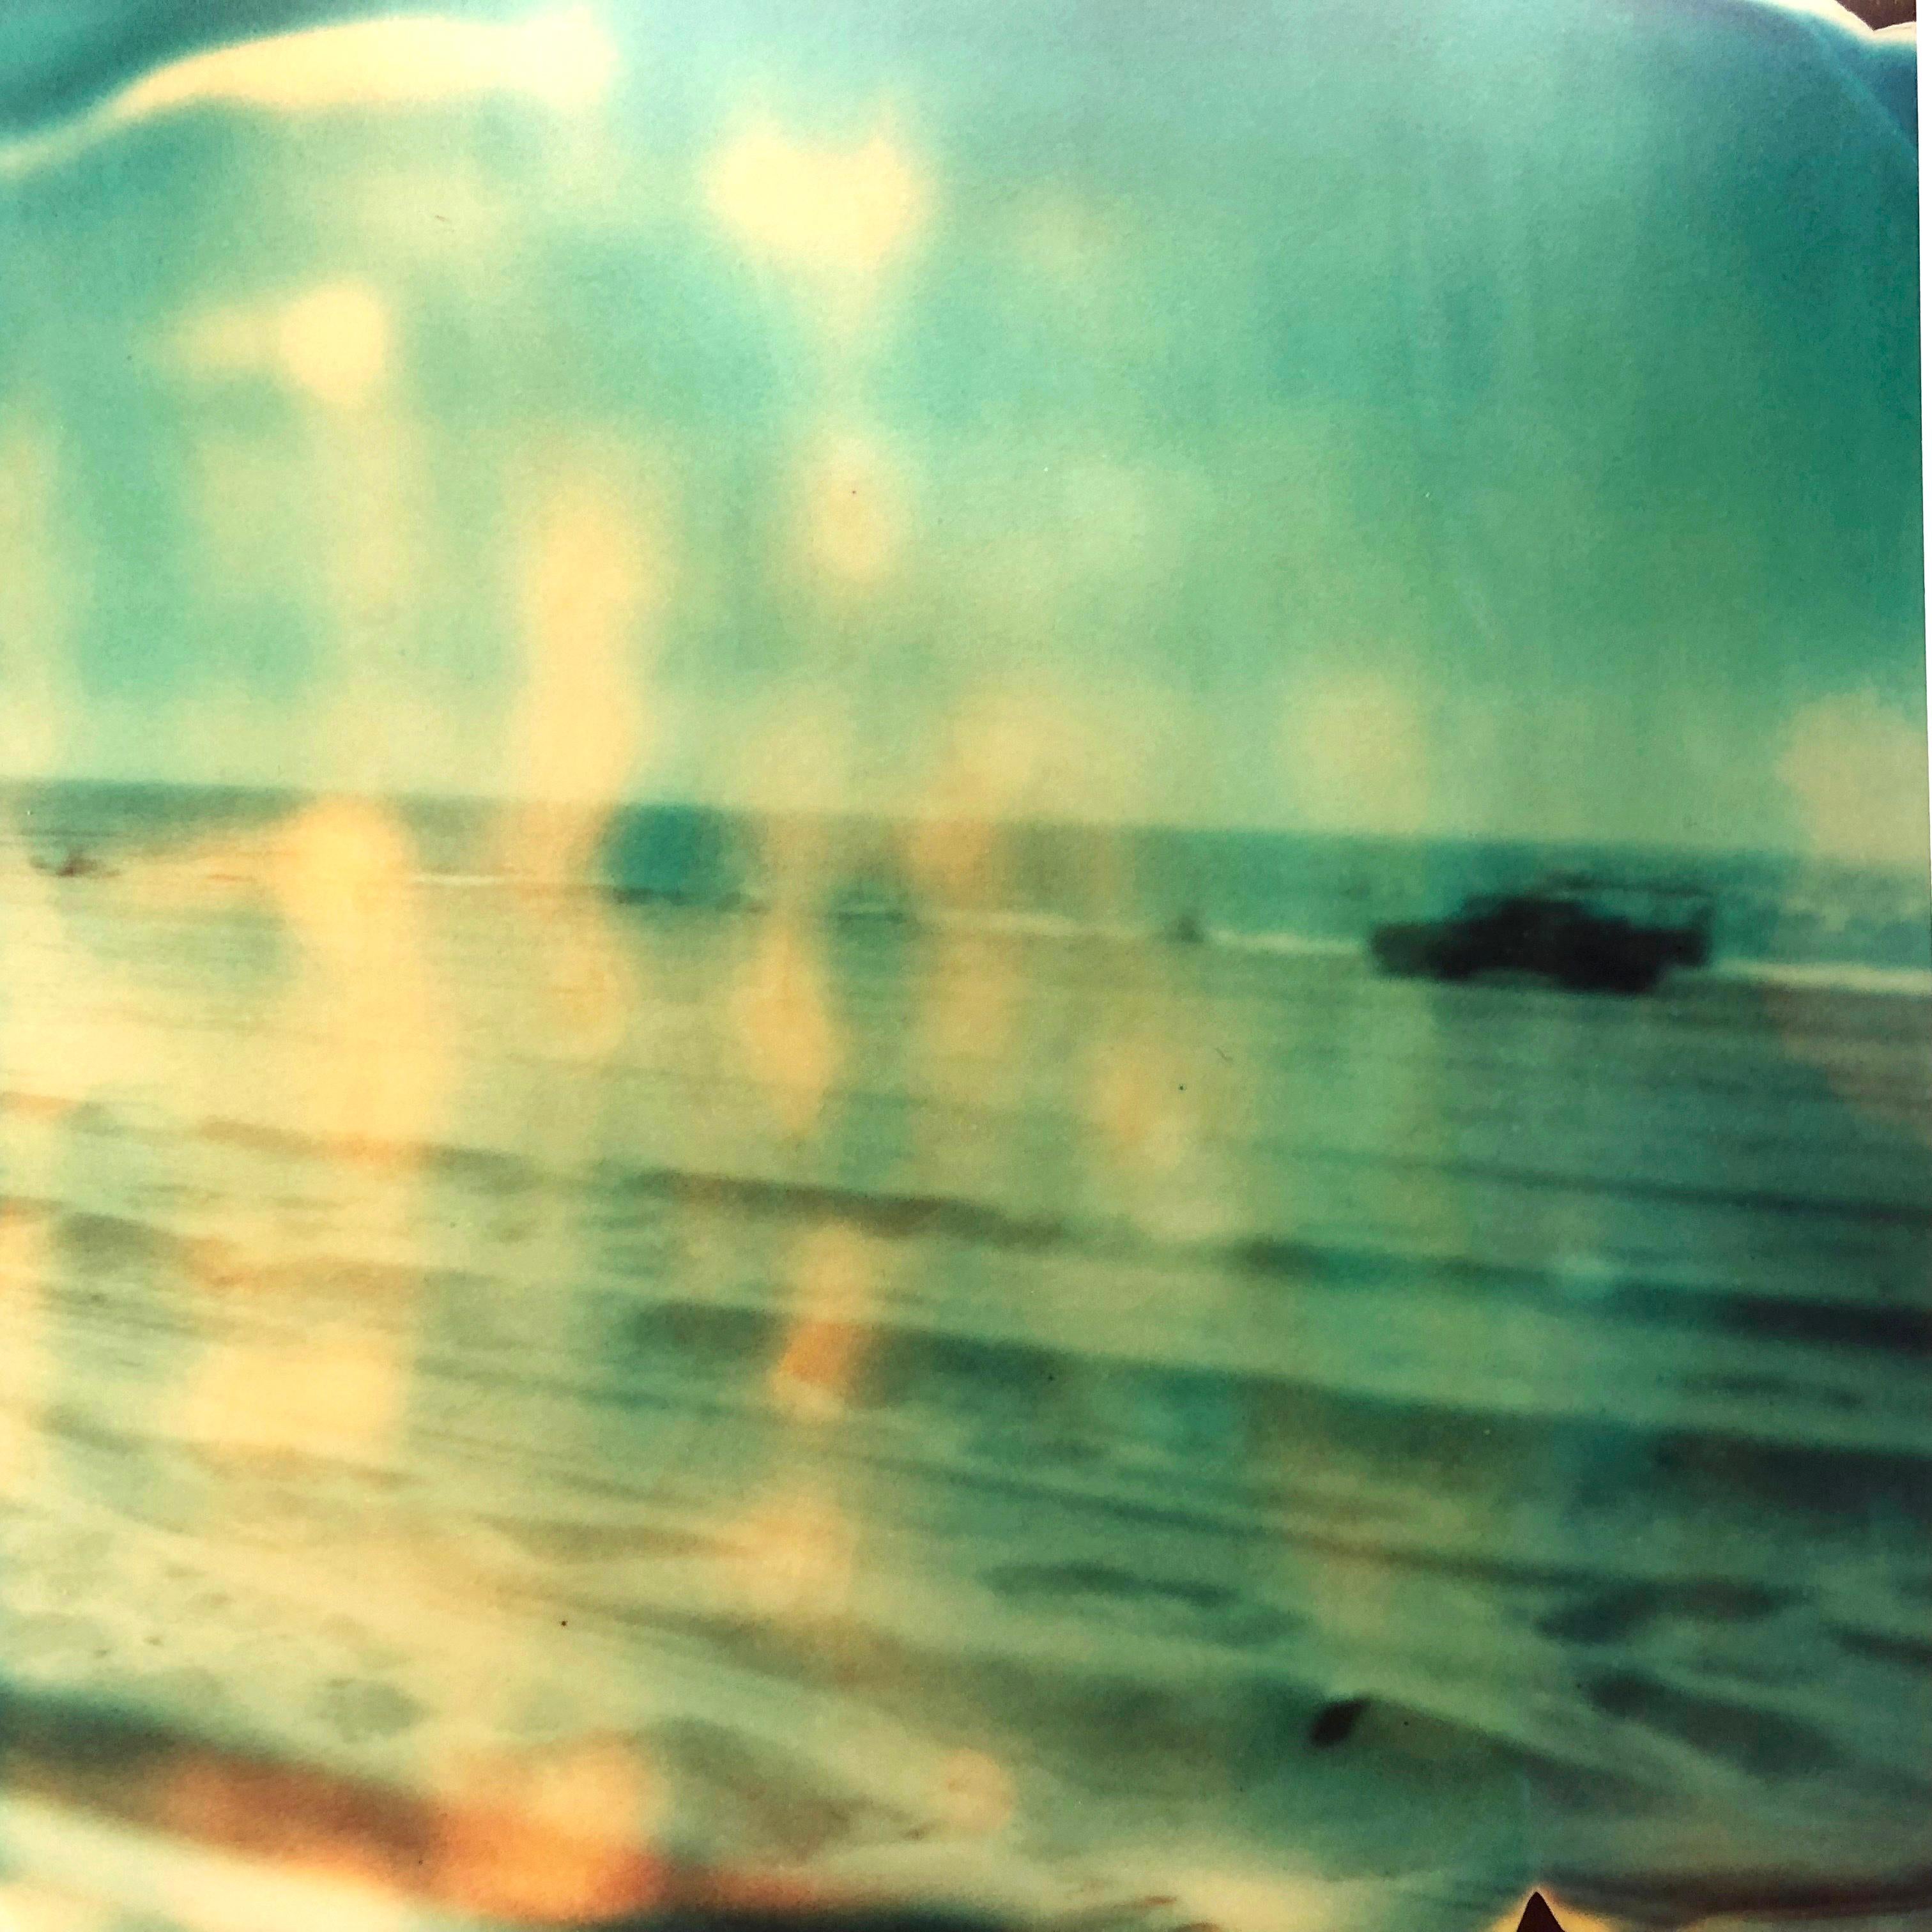 Stefanie Schneider Landscape Photograph - Lifeguard (Malibu) - Contemporary, Landscape, expired, Polaroid, analog